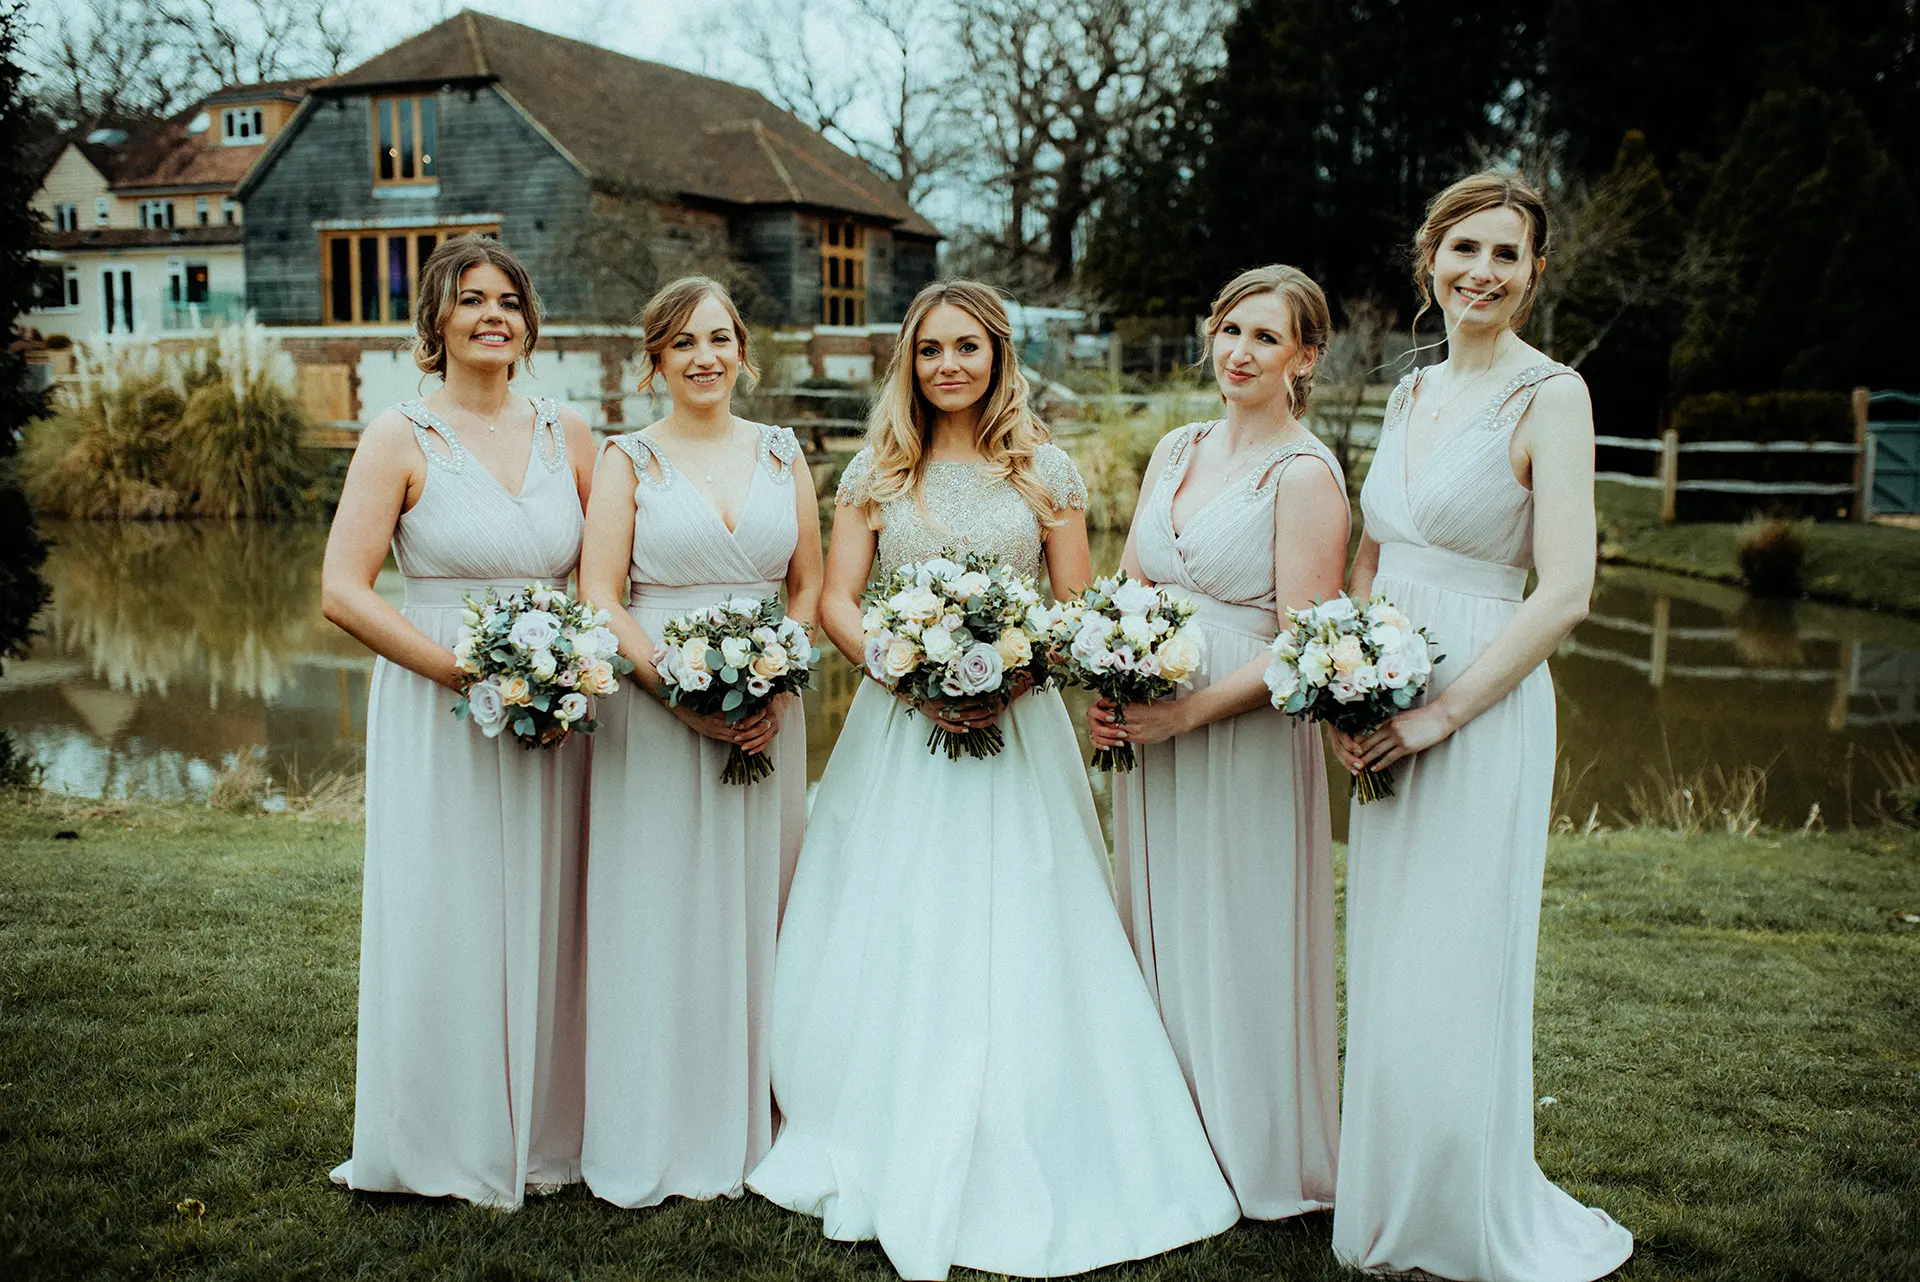 Brookfield Barn bride and bridesmaids